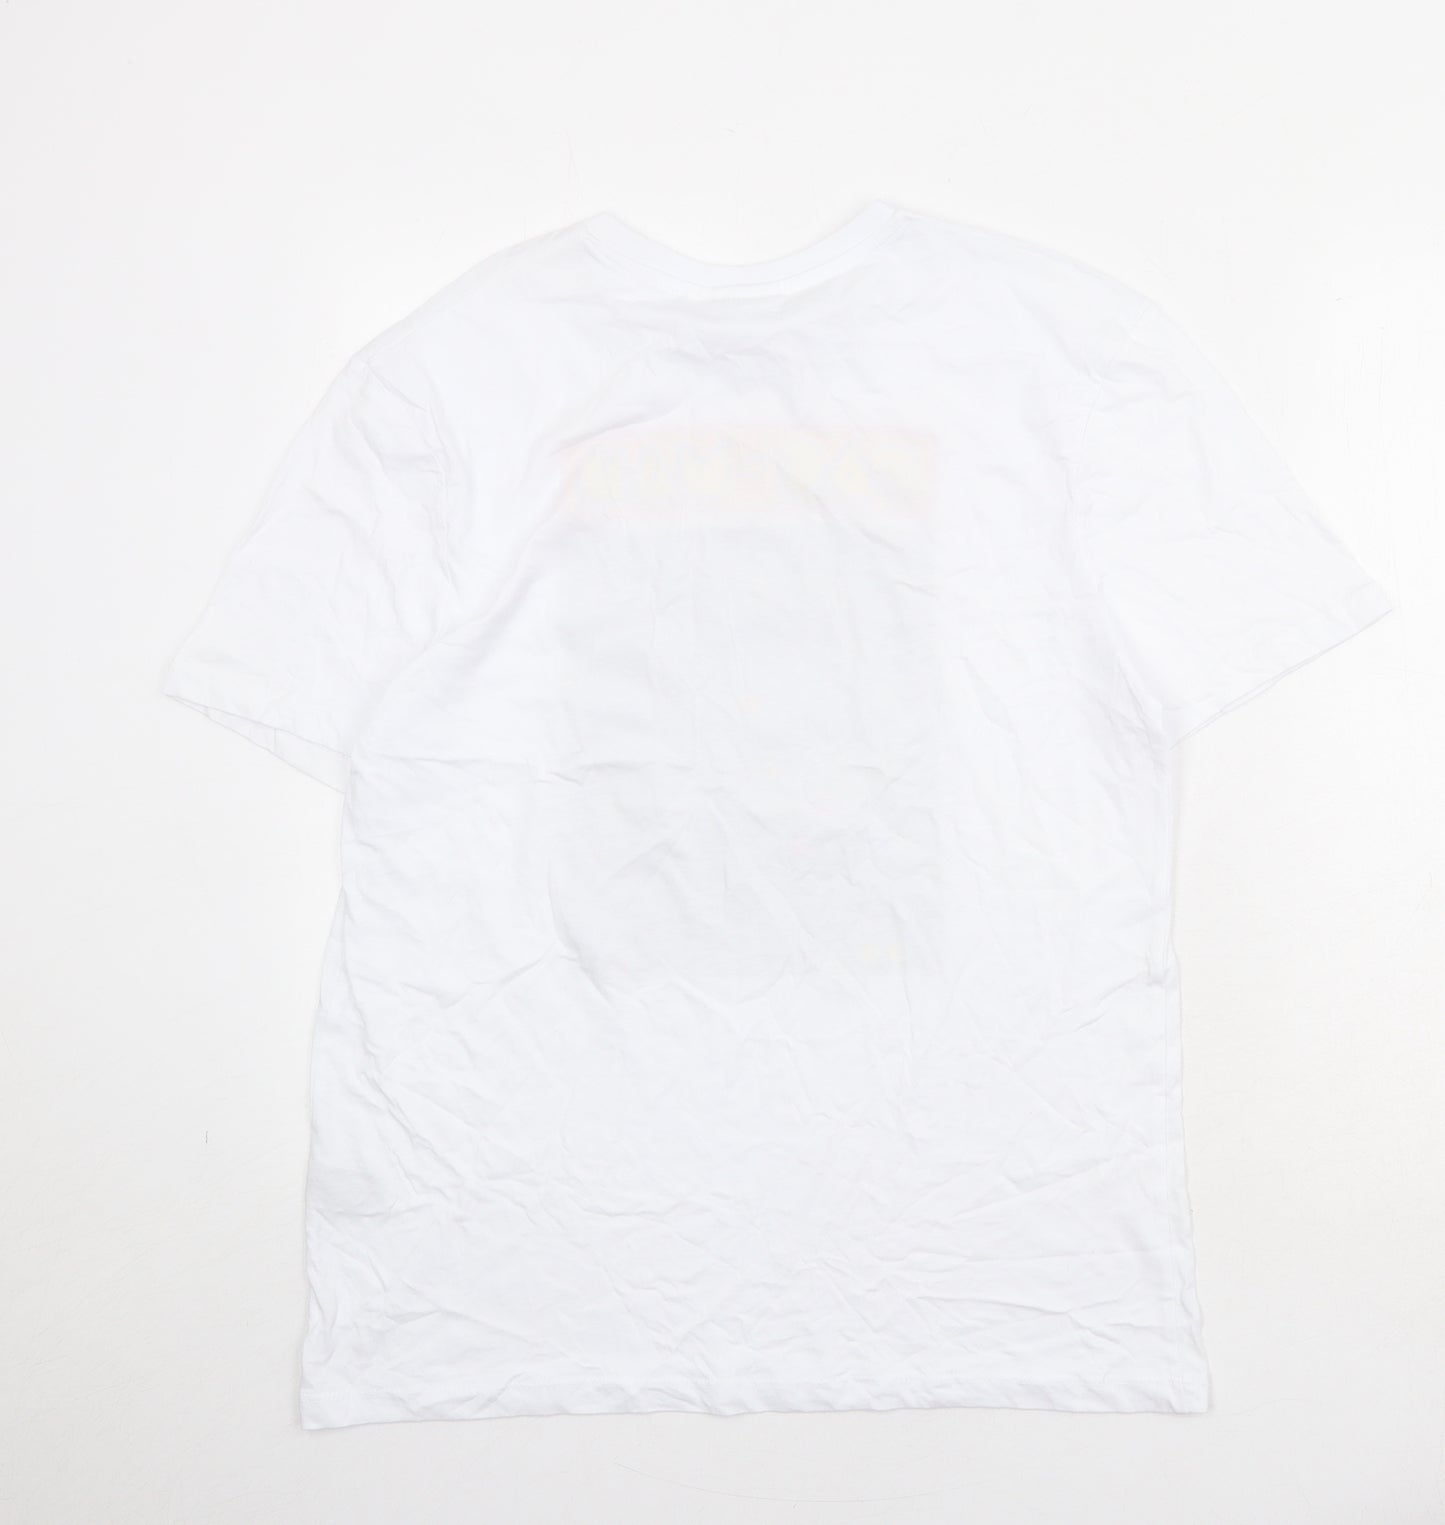 Pac-Man Womens White 100% Cotton Basic T-Shirt Size L Round Neck